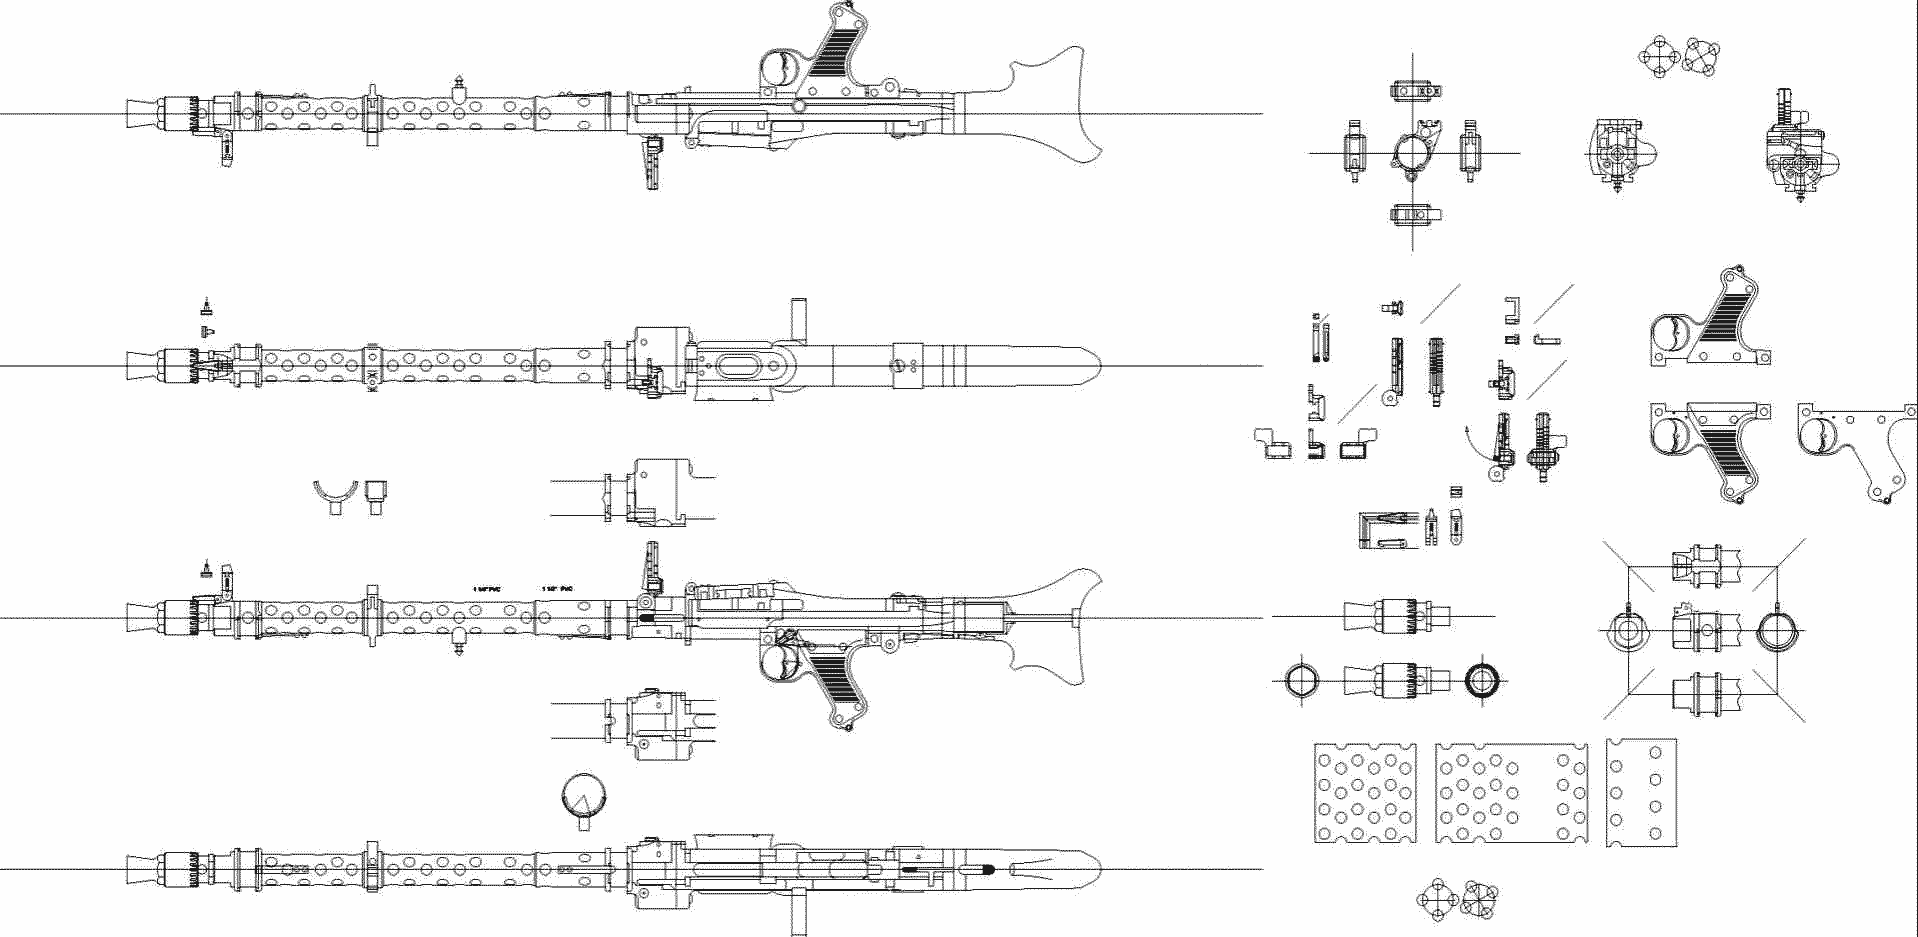 MG 34 blueprint